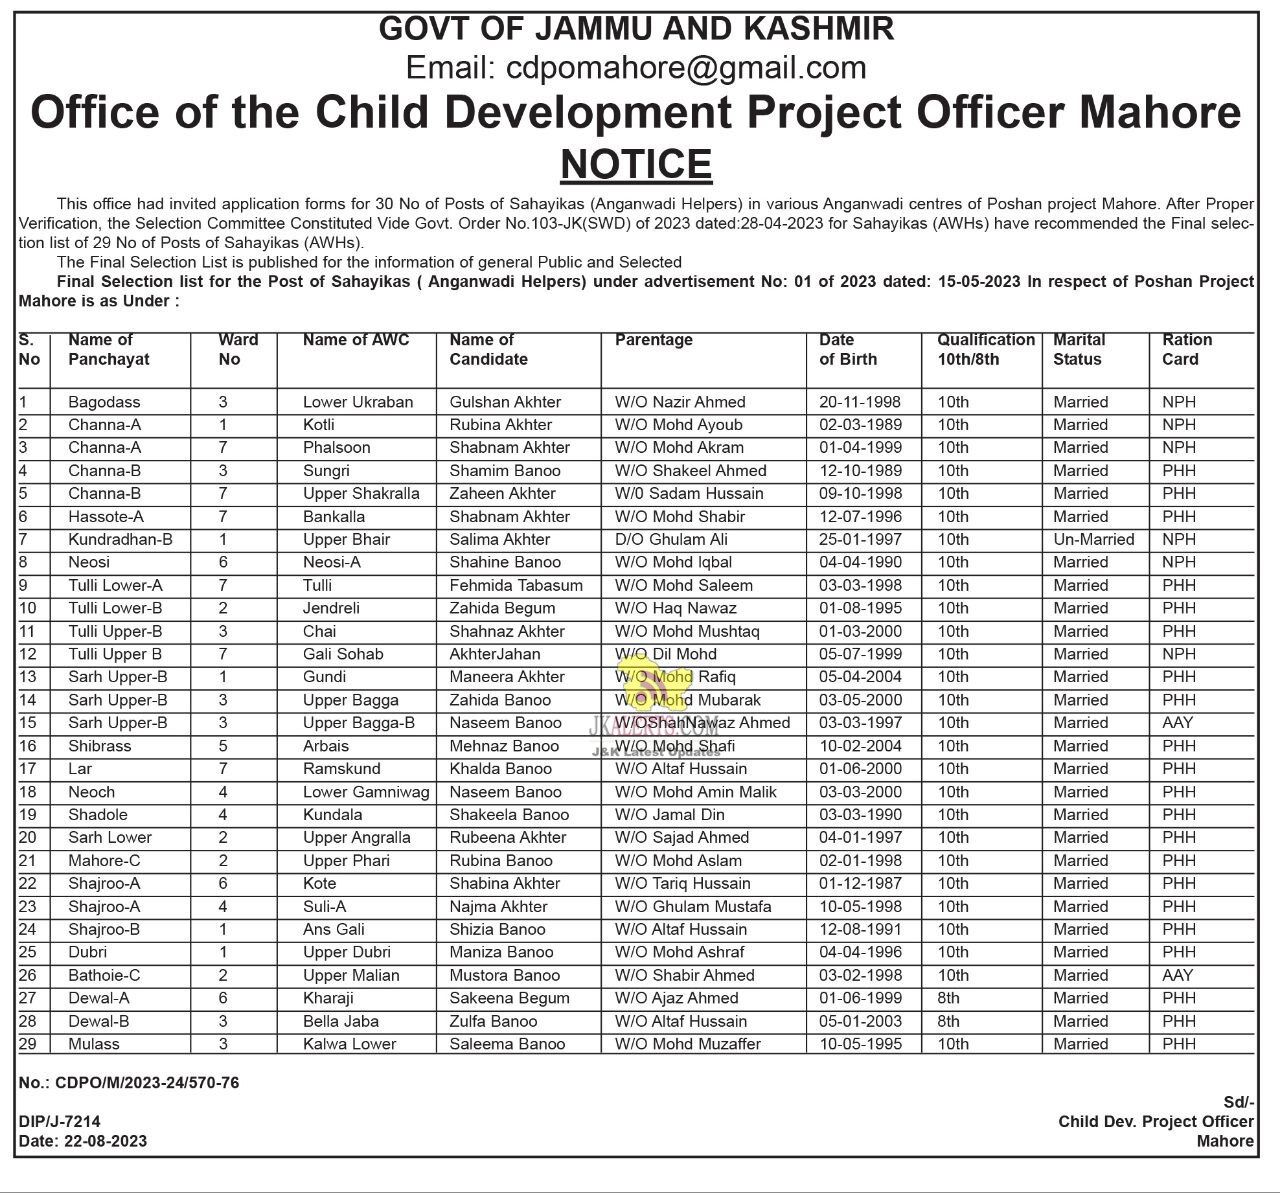 Selection List for the Post of Anganwadi Helpers Mahore.